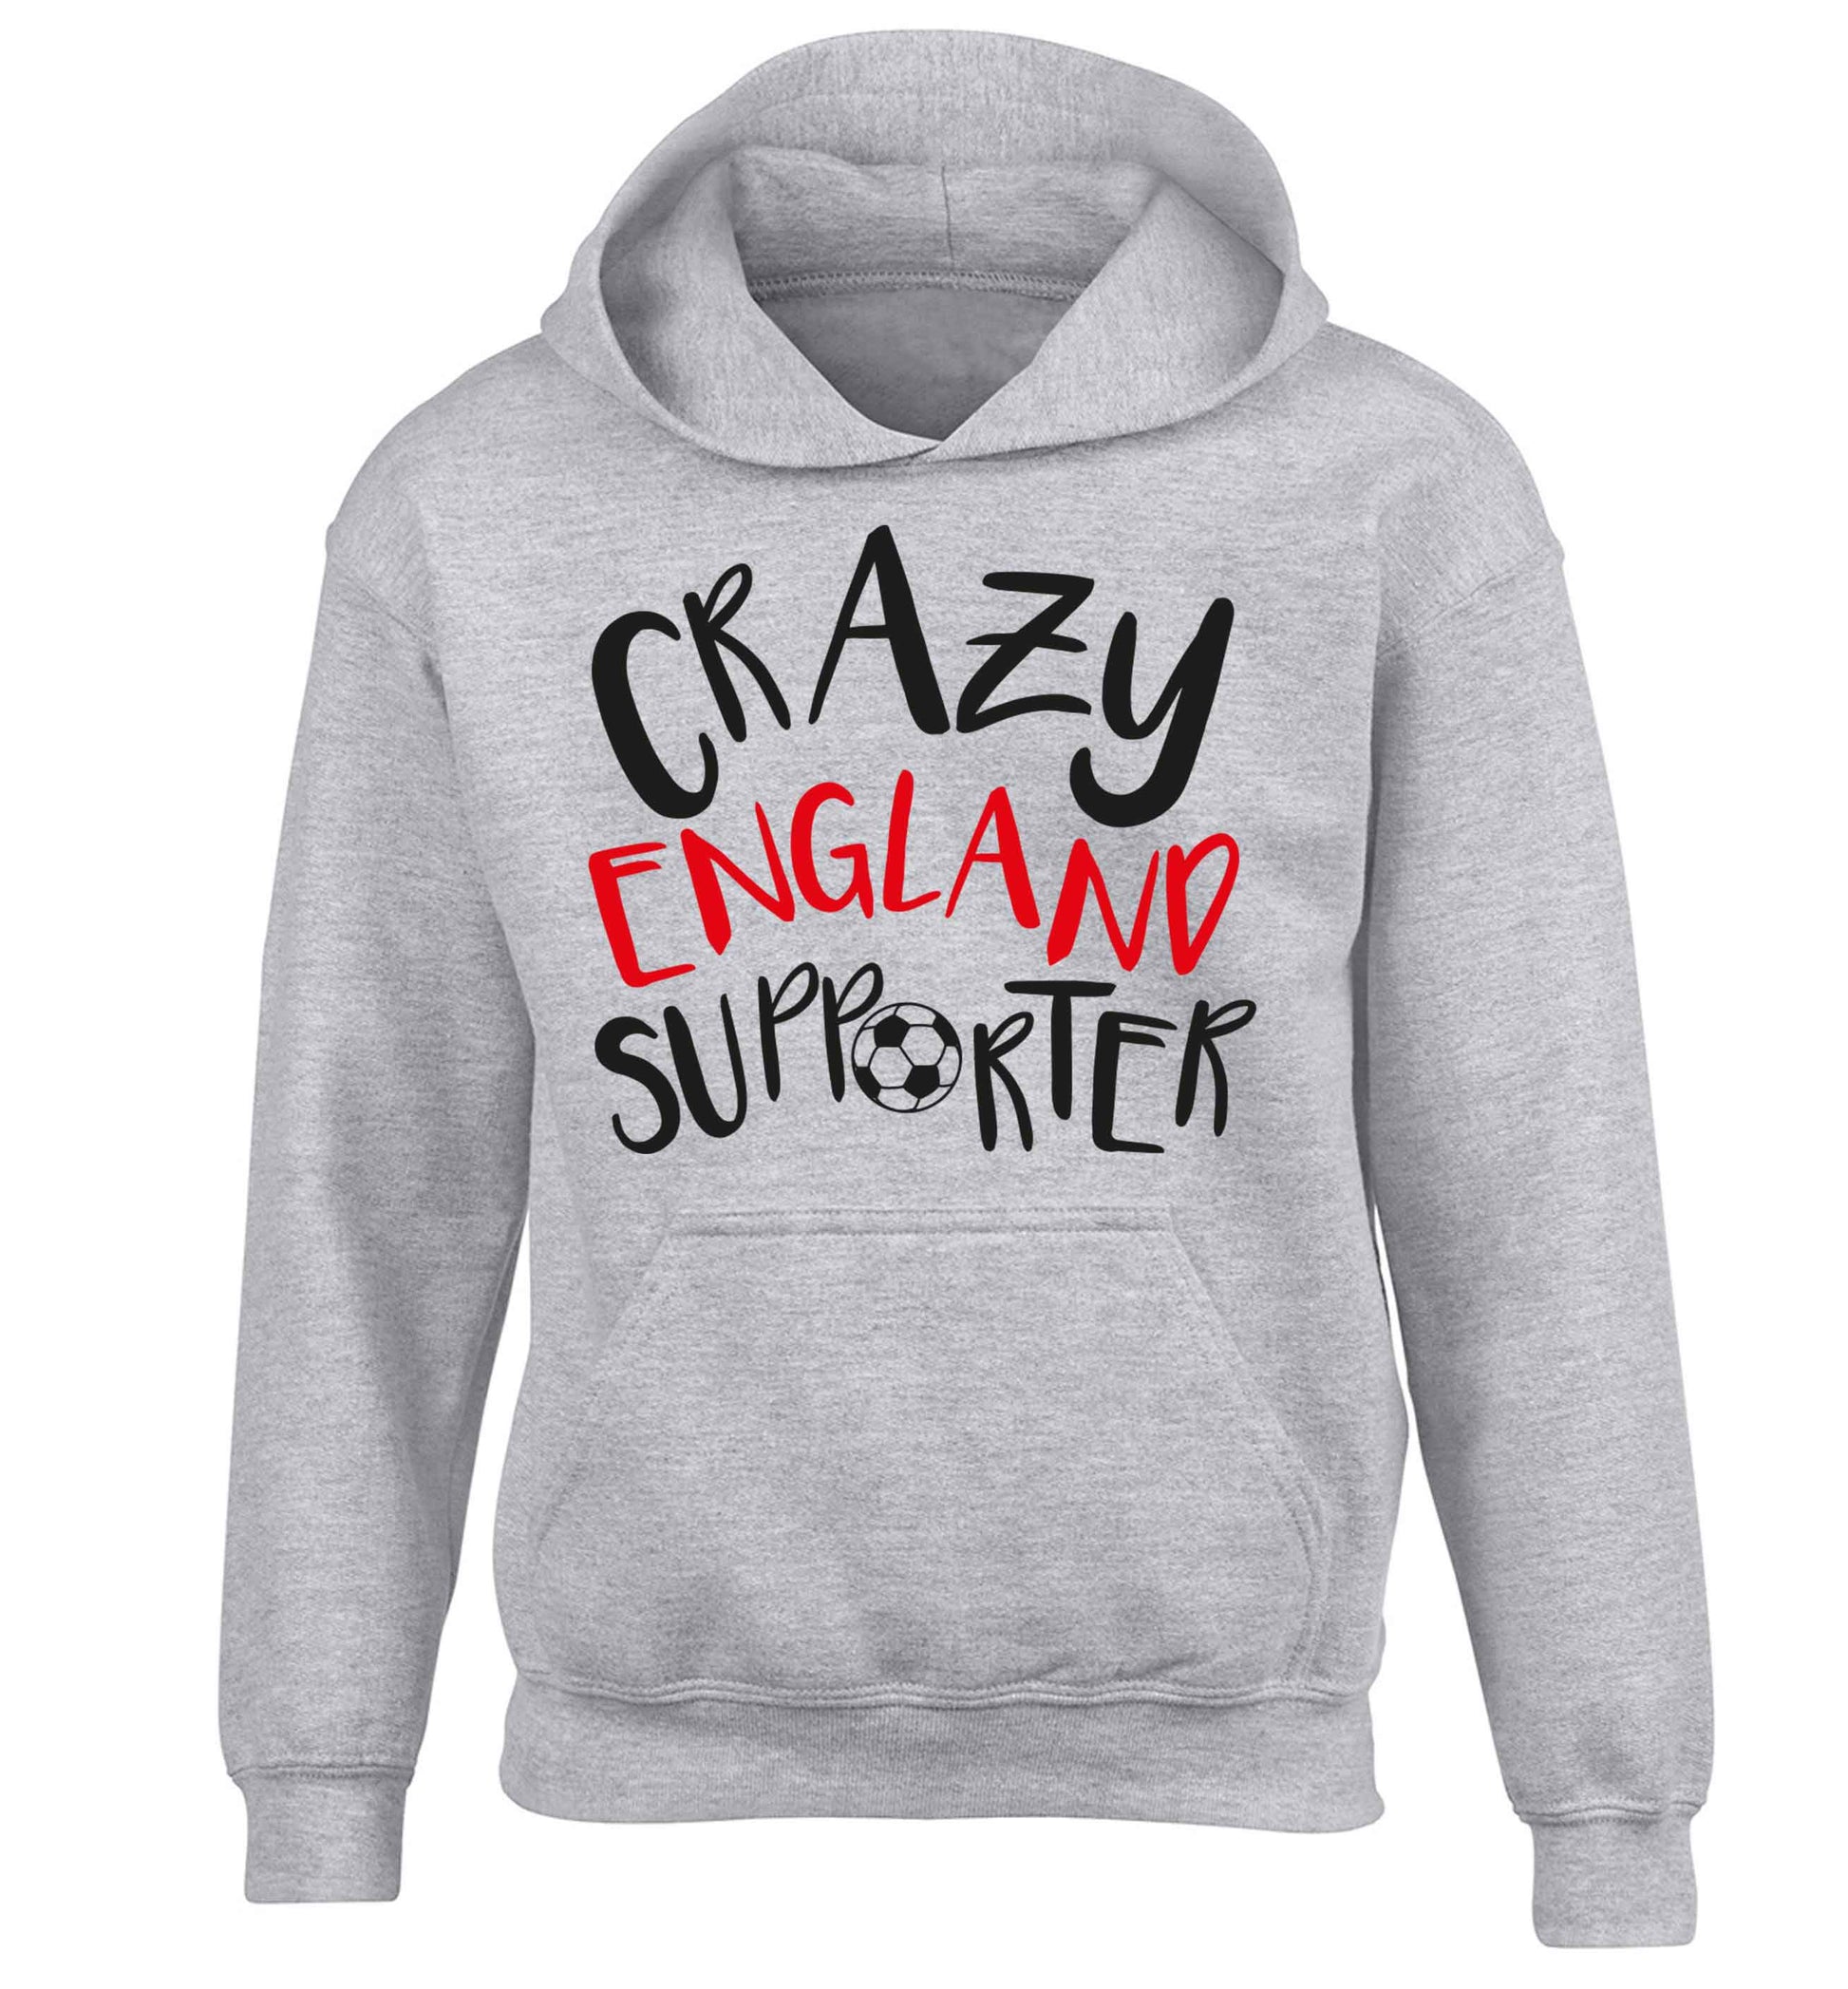 Crazy England supporter children's grey hoodie 12-13 Years